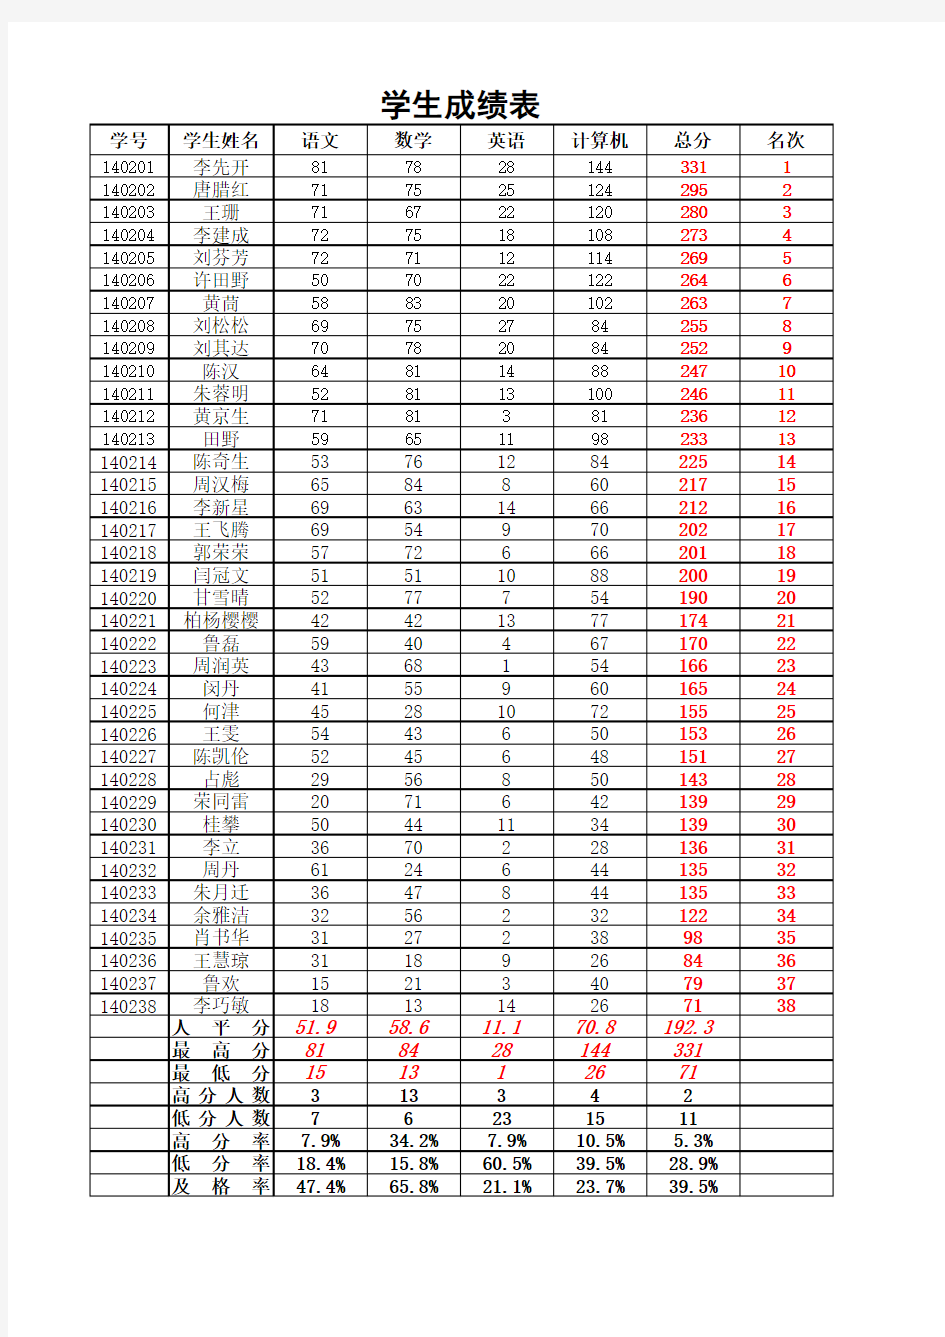 Excel2010操作实例(学生考试成绩表制作与数据处理)